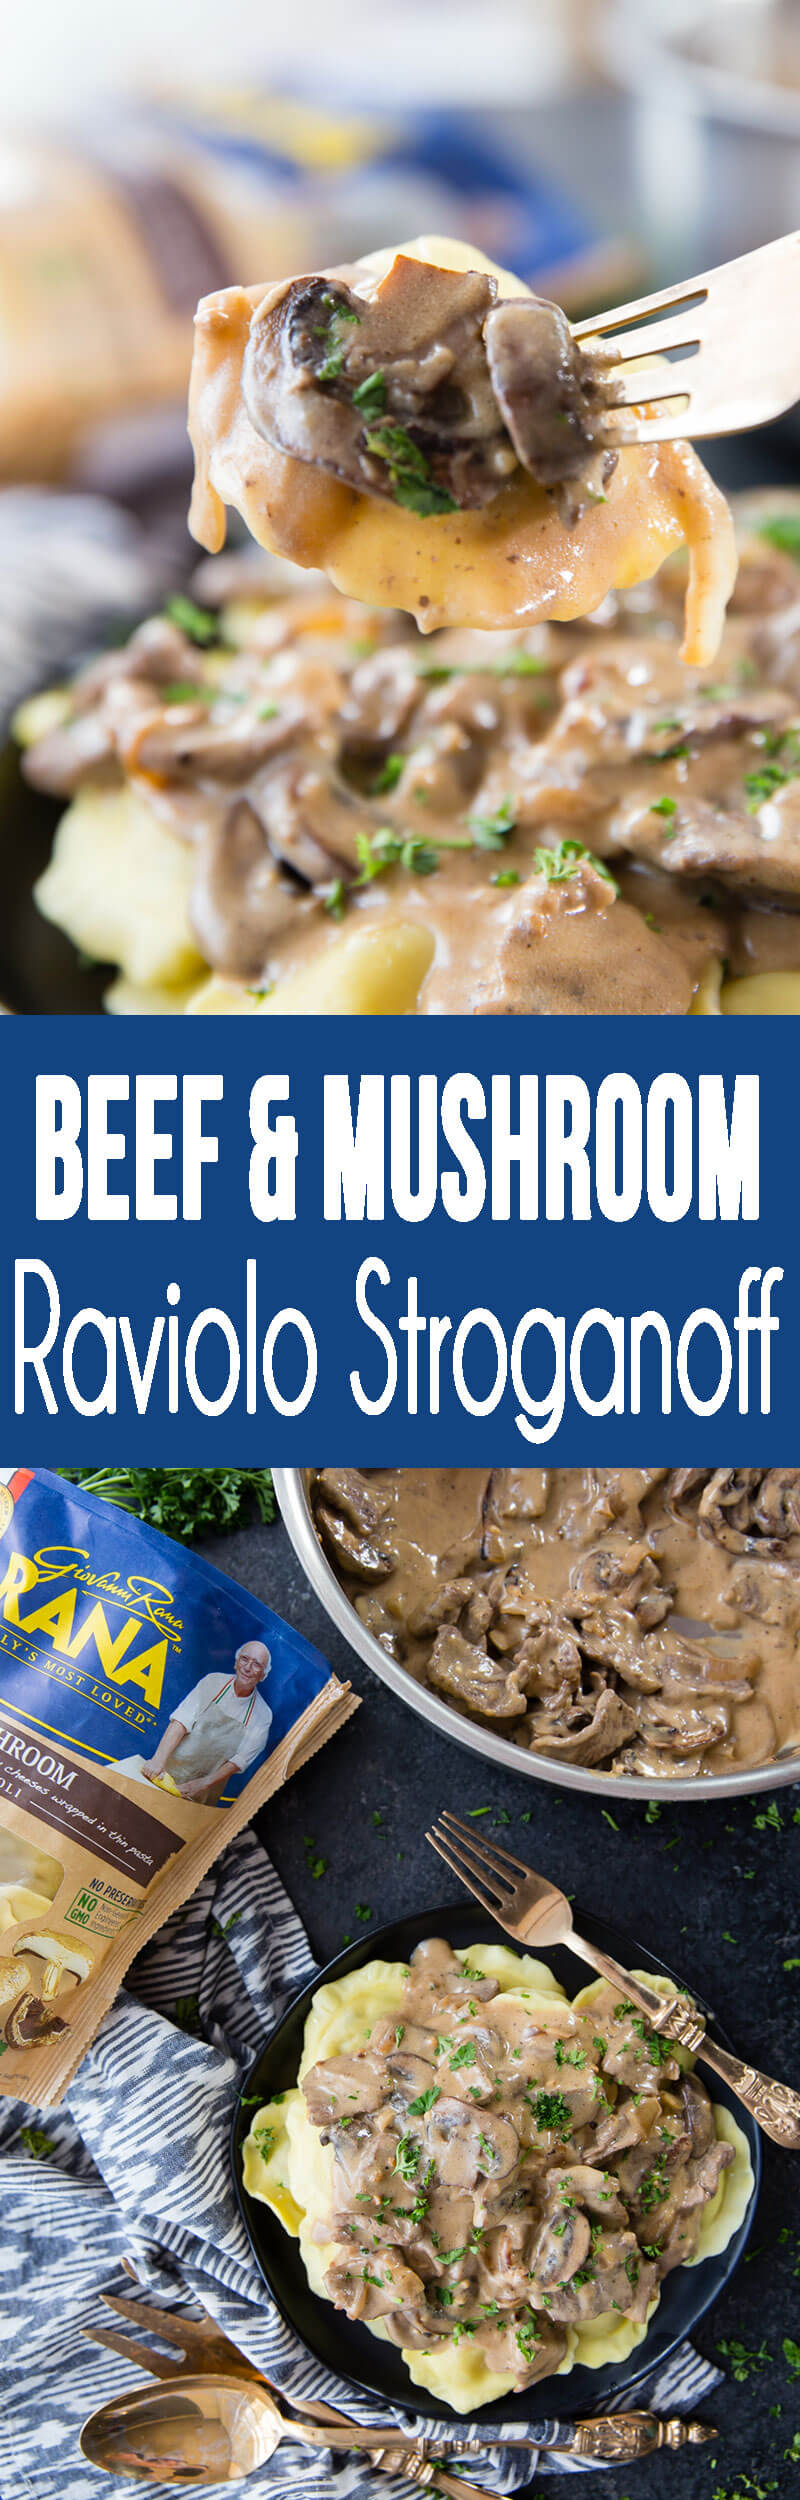 Beef and Mushroom Ravioli Stroganoff with delicious sauce